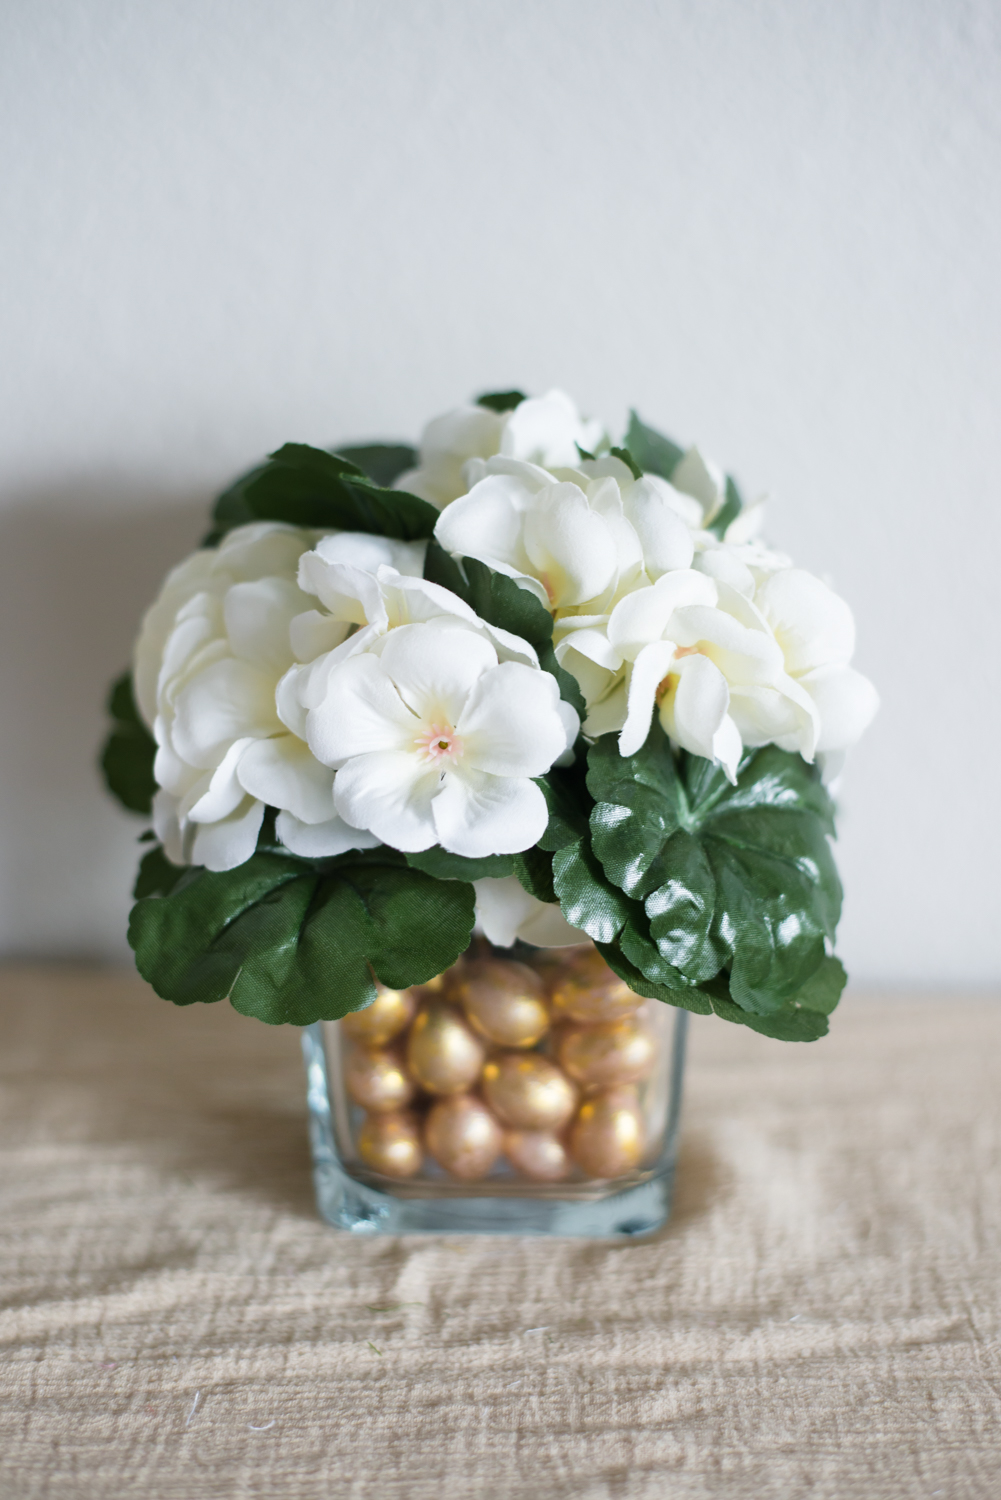 $4 Dollar Tree Easter DIY | Mini Egg Floral Arrangements